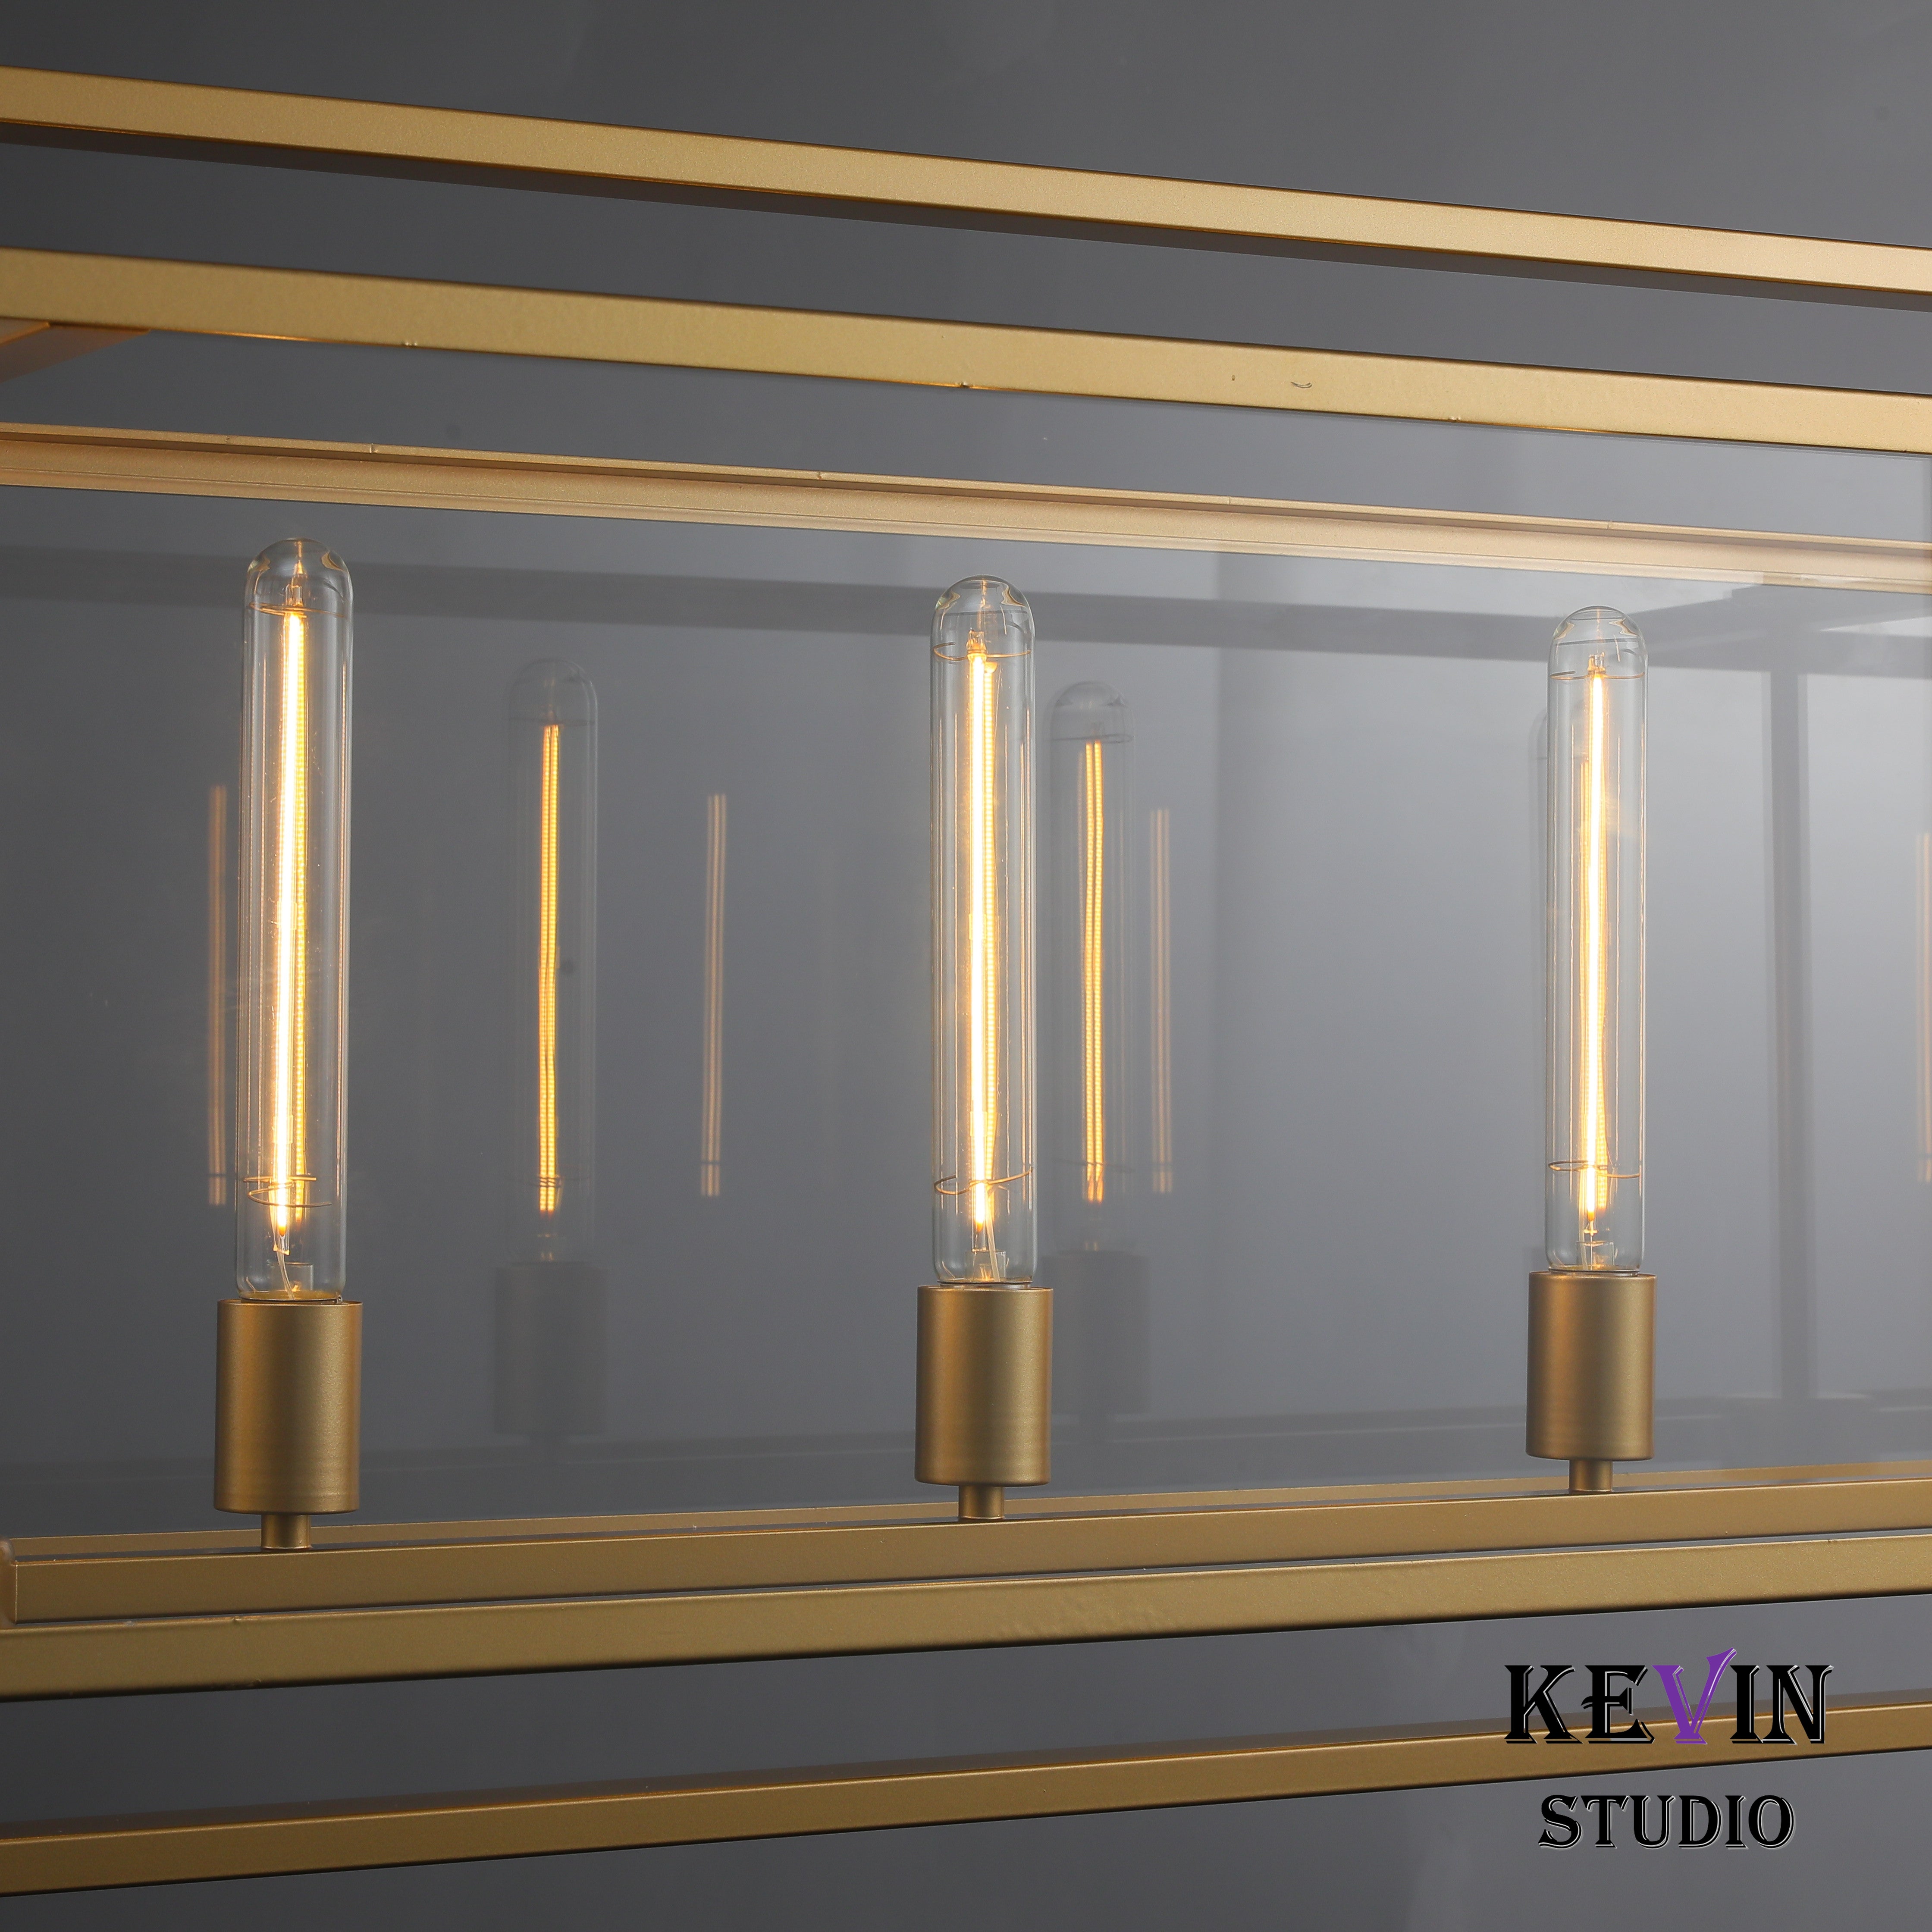 Deck Candlestick Glass Lantern Modern Rectangular Chandelier 54'', 72'' chandelier Kevin Studio Inc   